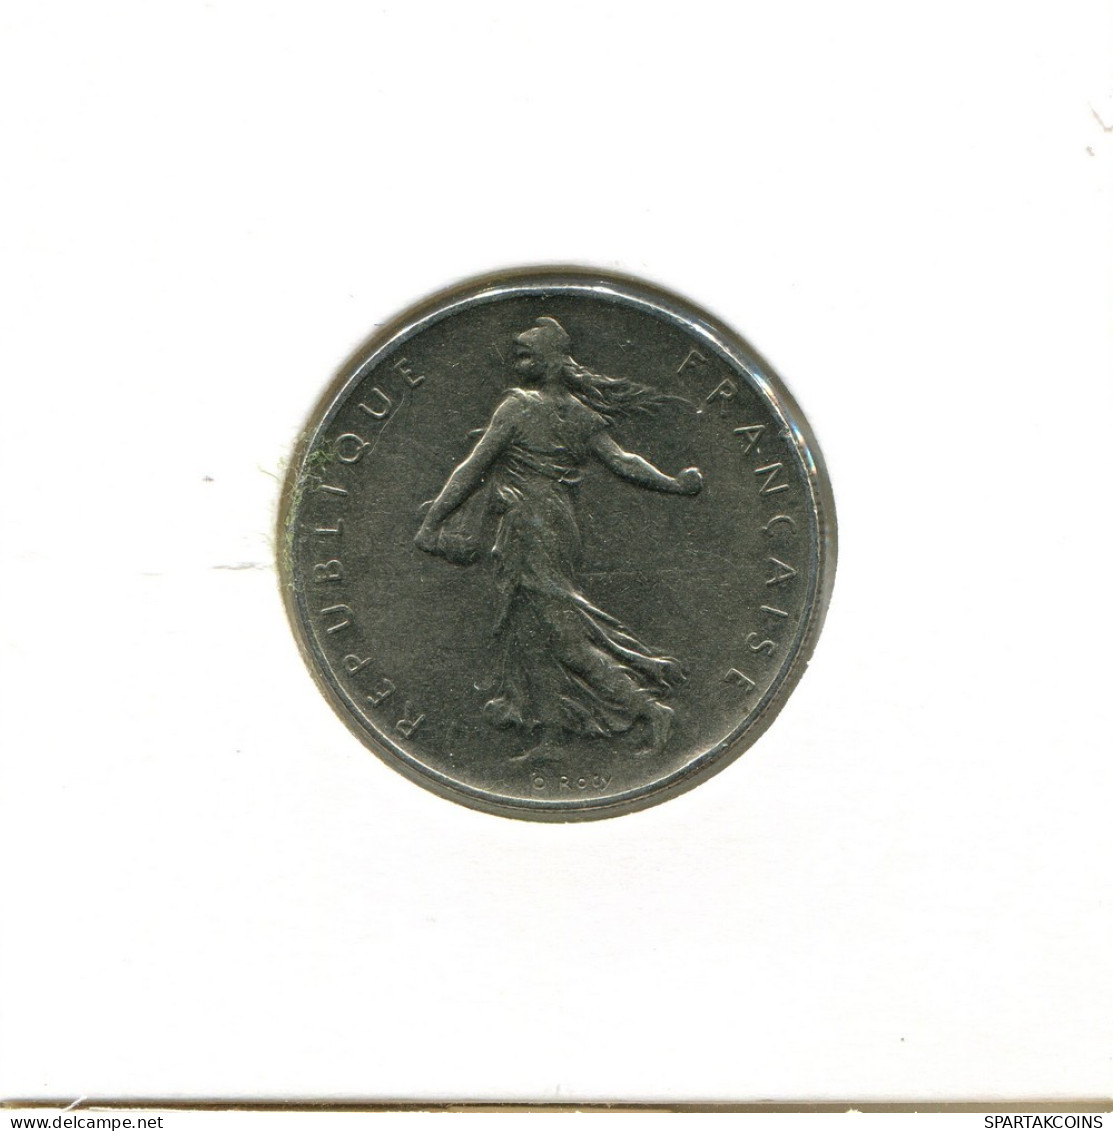 1 FRANC 1965 FRANKREICH FRANCE Französisch Münze #BA910.D.A - 1 Franc